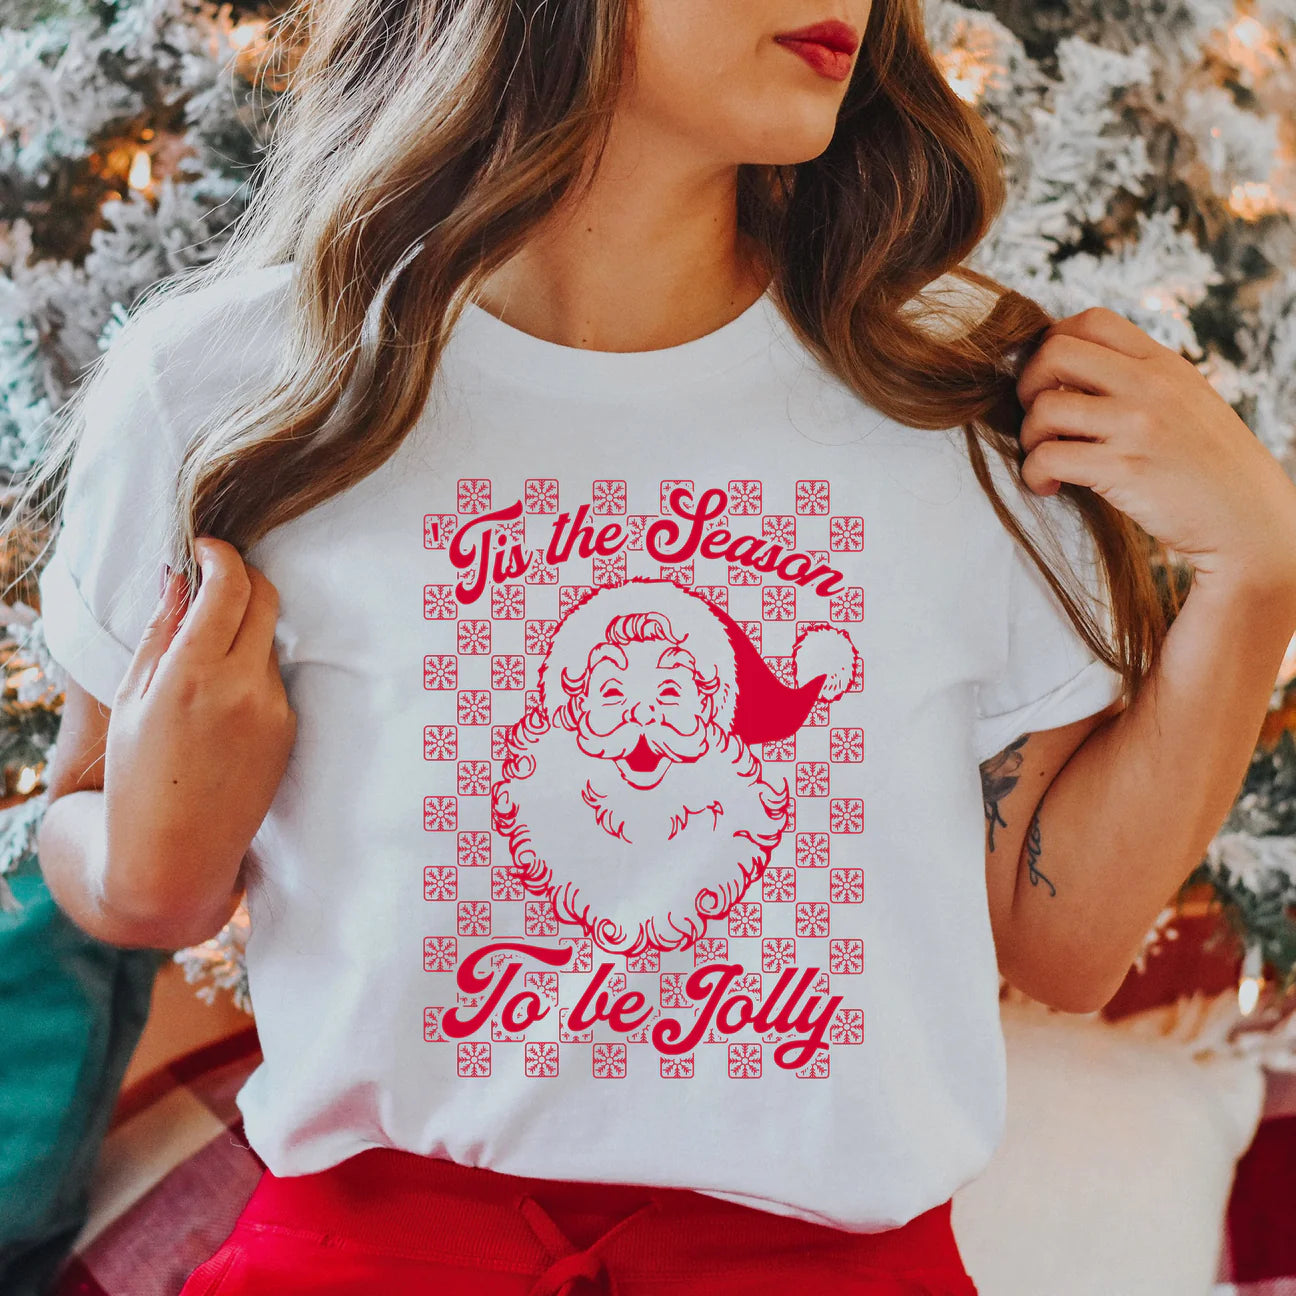 "Tis the Season to be Jolly" T-shirt or Sweatshirt (shown on "White")